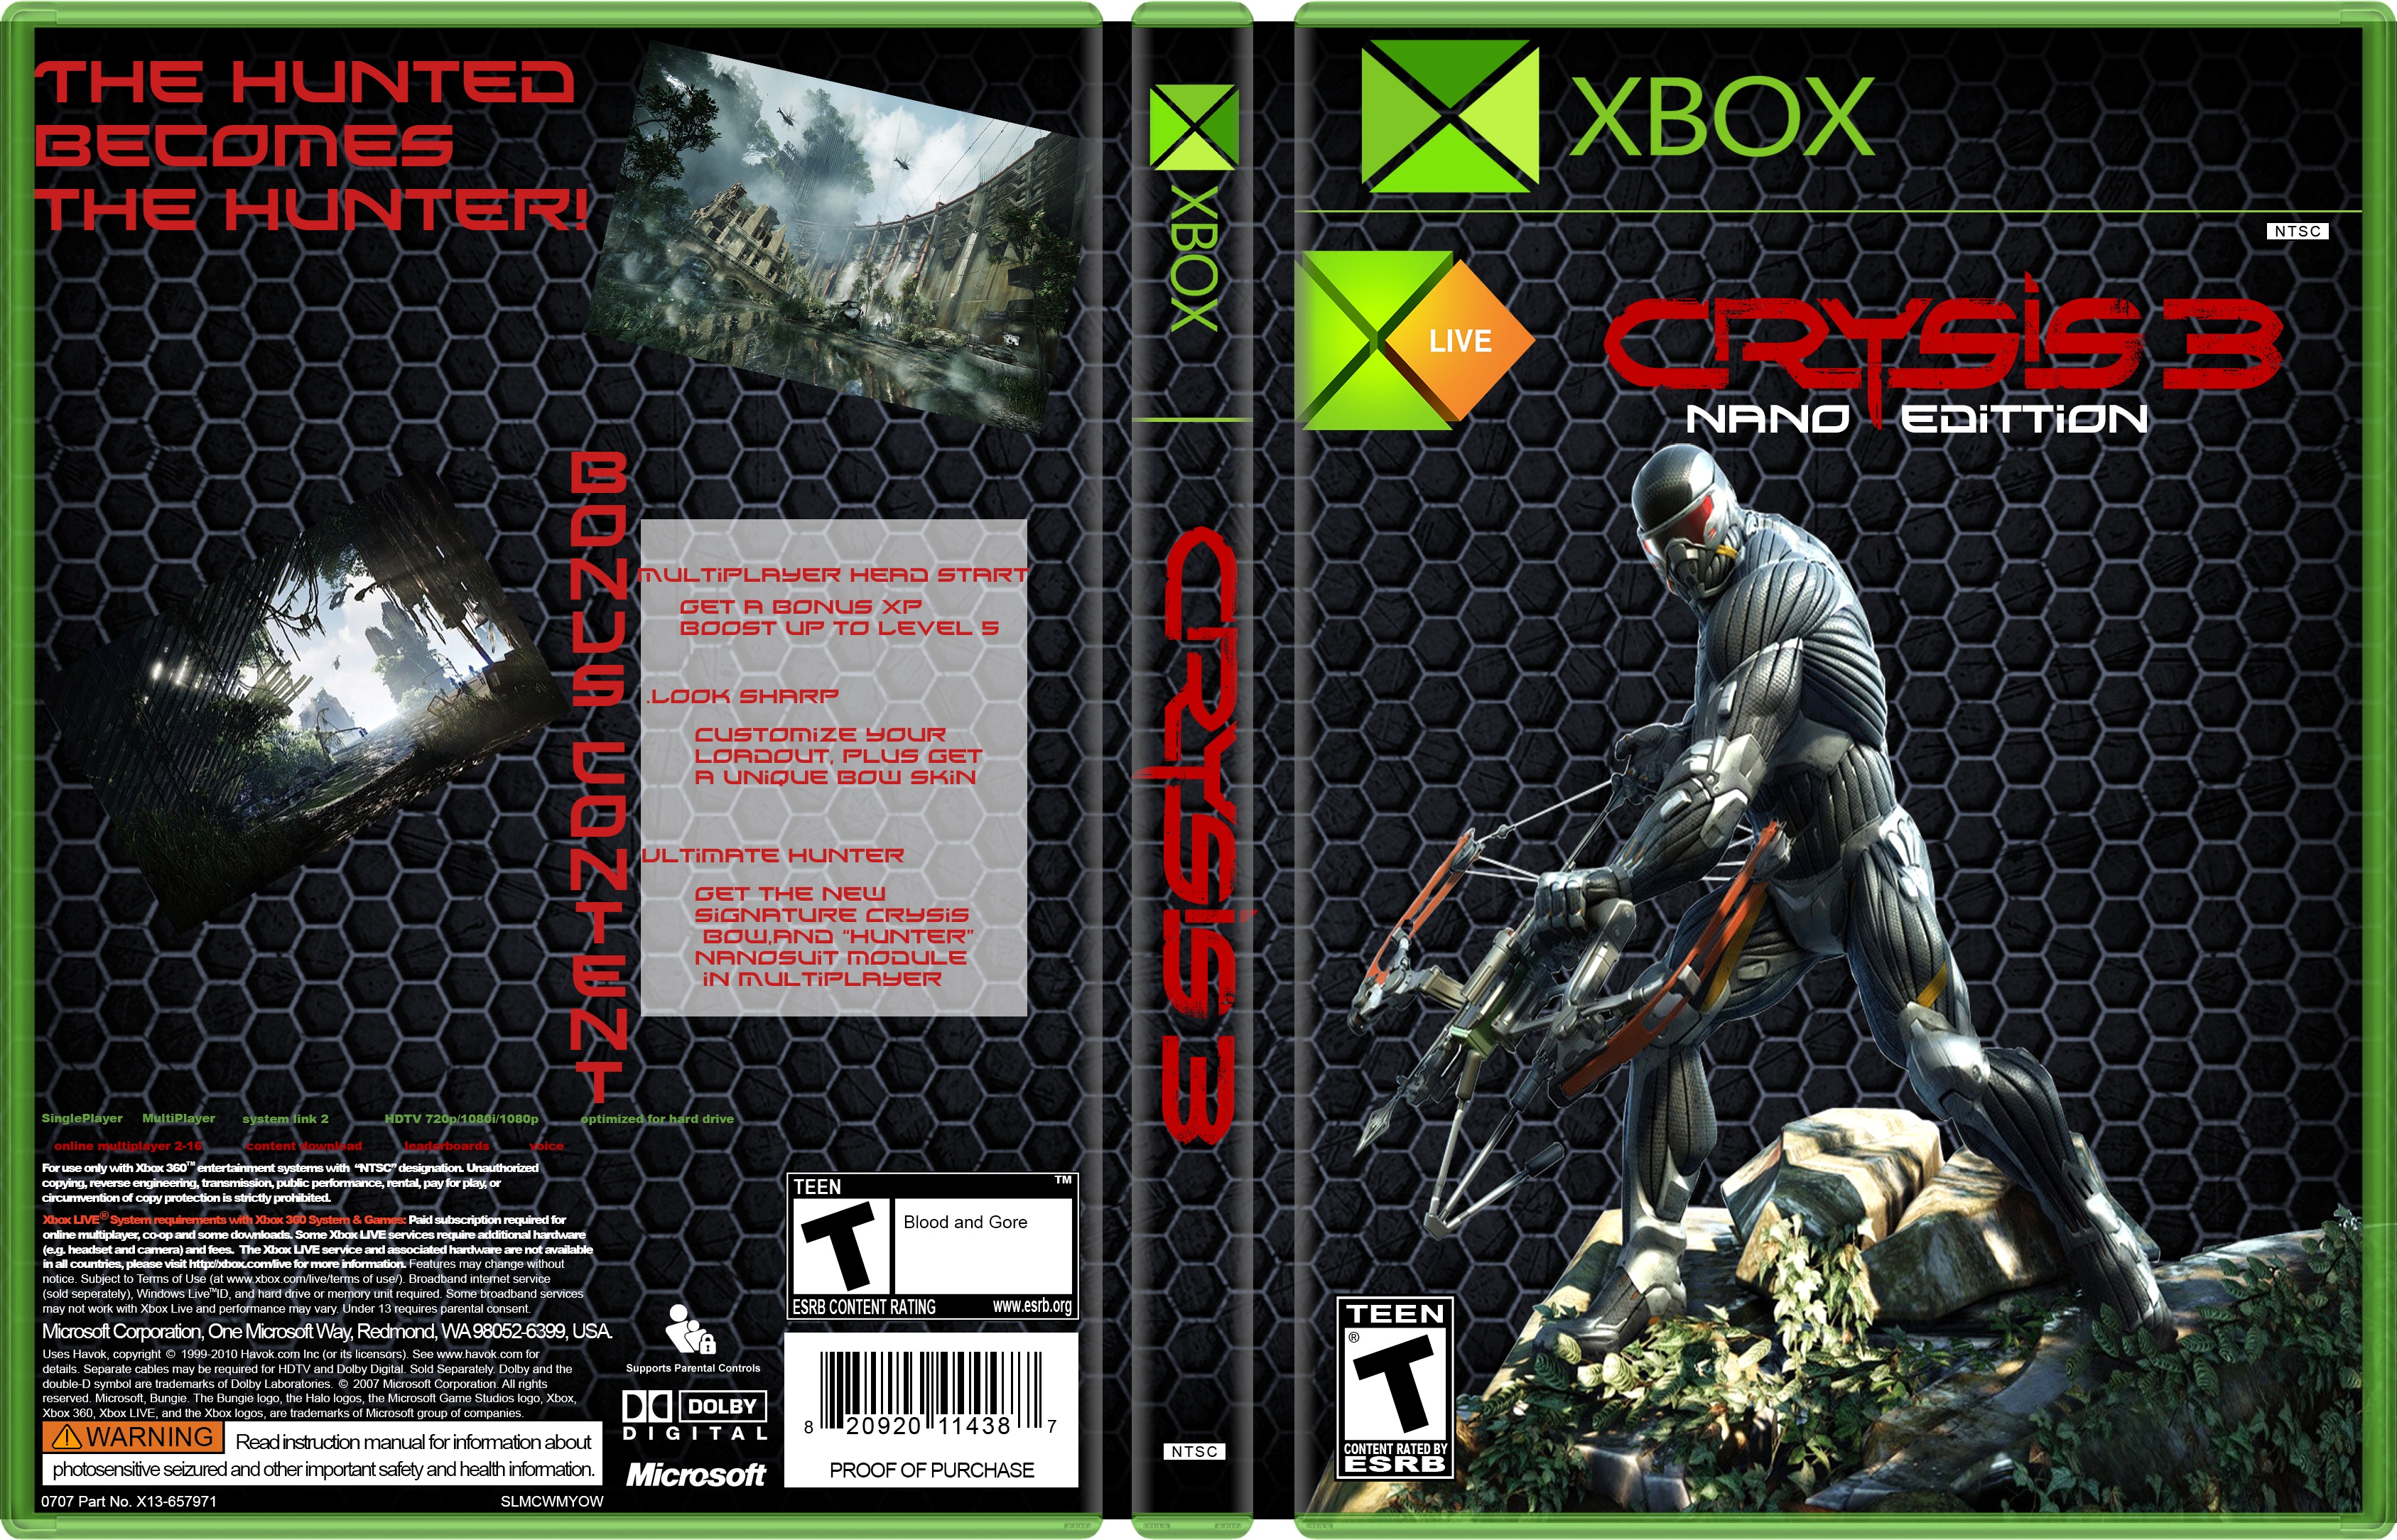 Crysis 3 Nano Edition box cover